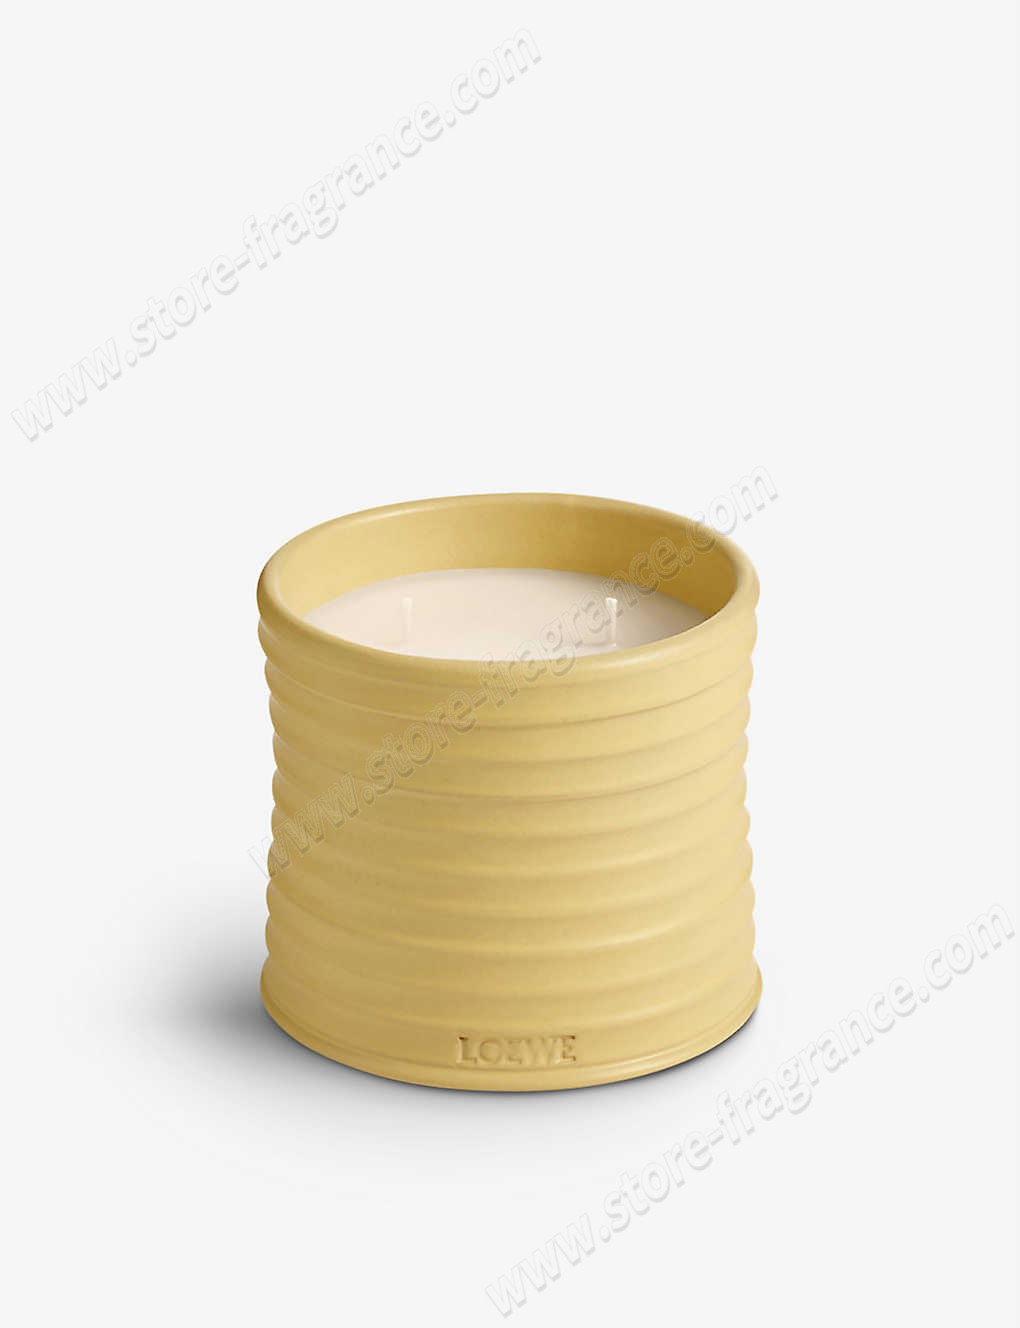 LOEWE/Honeysuckle scented candle 610g ✿ Discount Store - LOEWE/Honeysuckle scented candle 610g ✿ Discount Store